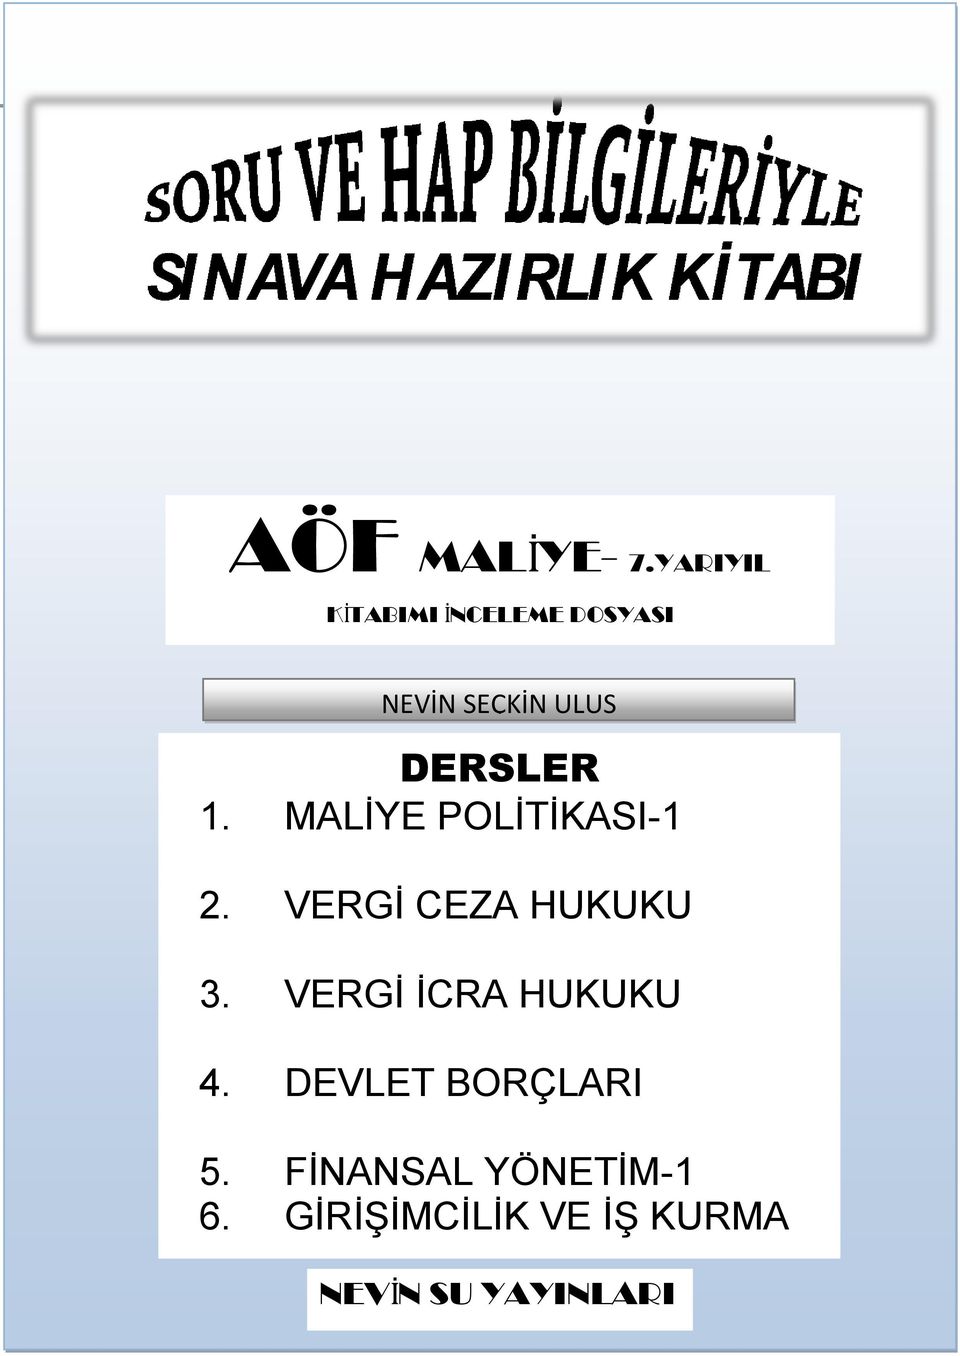 YARIYIL DERSLER 1. MALİYE POLİTİKASI-1 2.